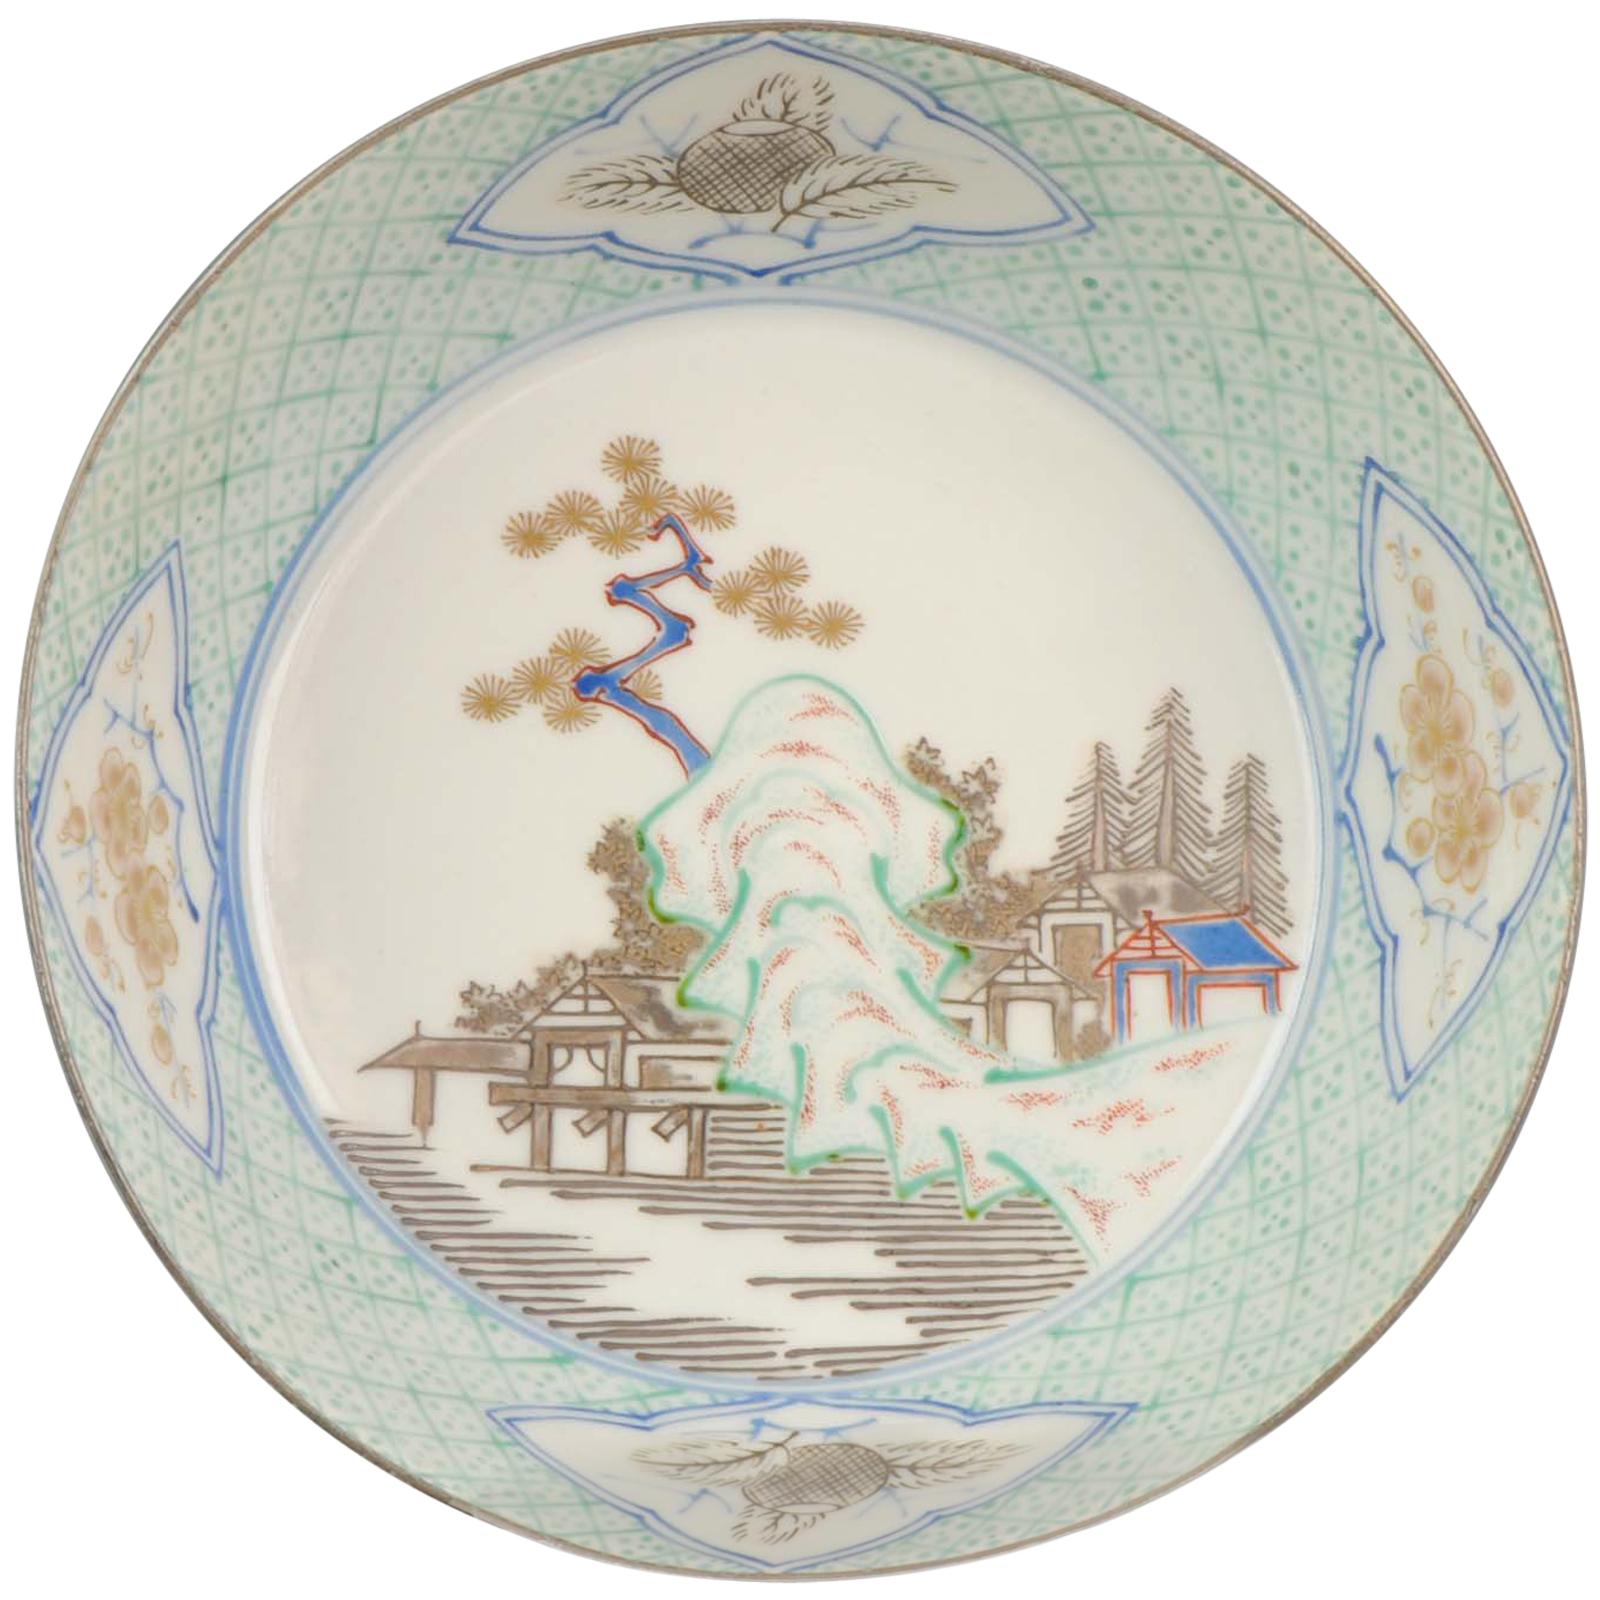 Antique 17th Century Japanese Porcelain Bowl 1660-1680 Ko-Imari Ninsei